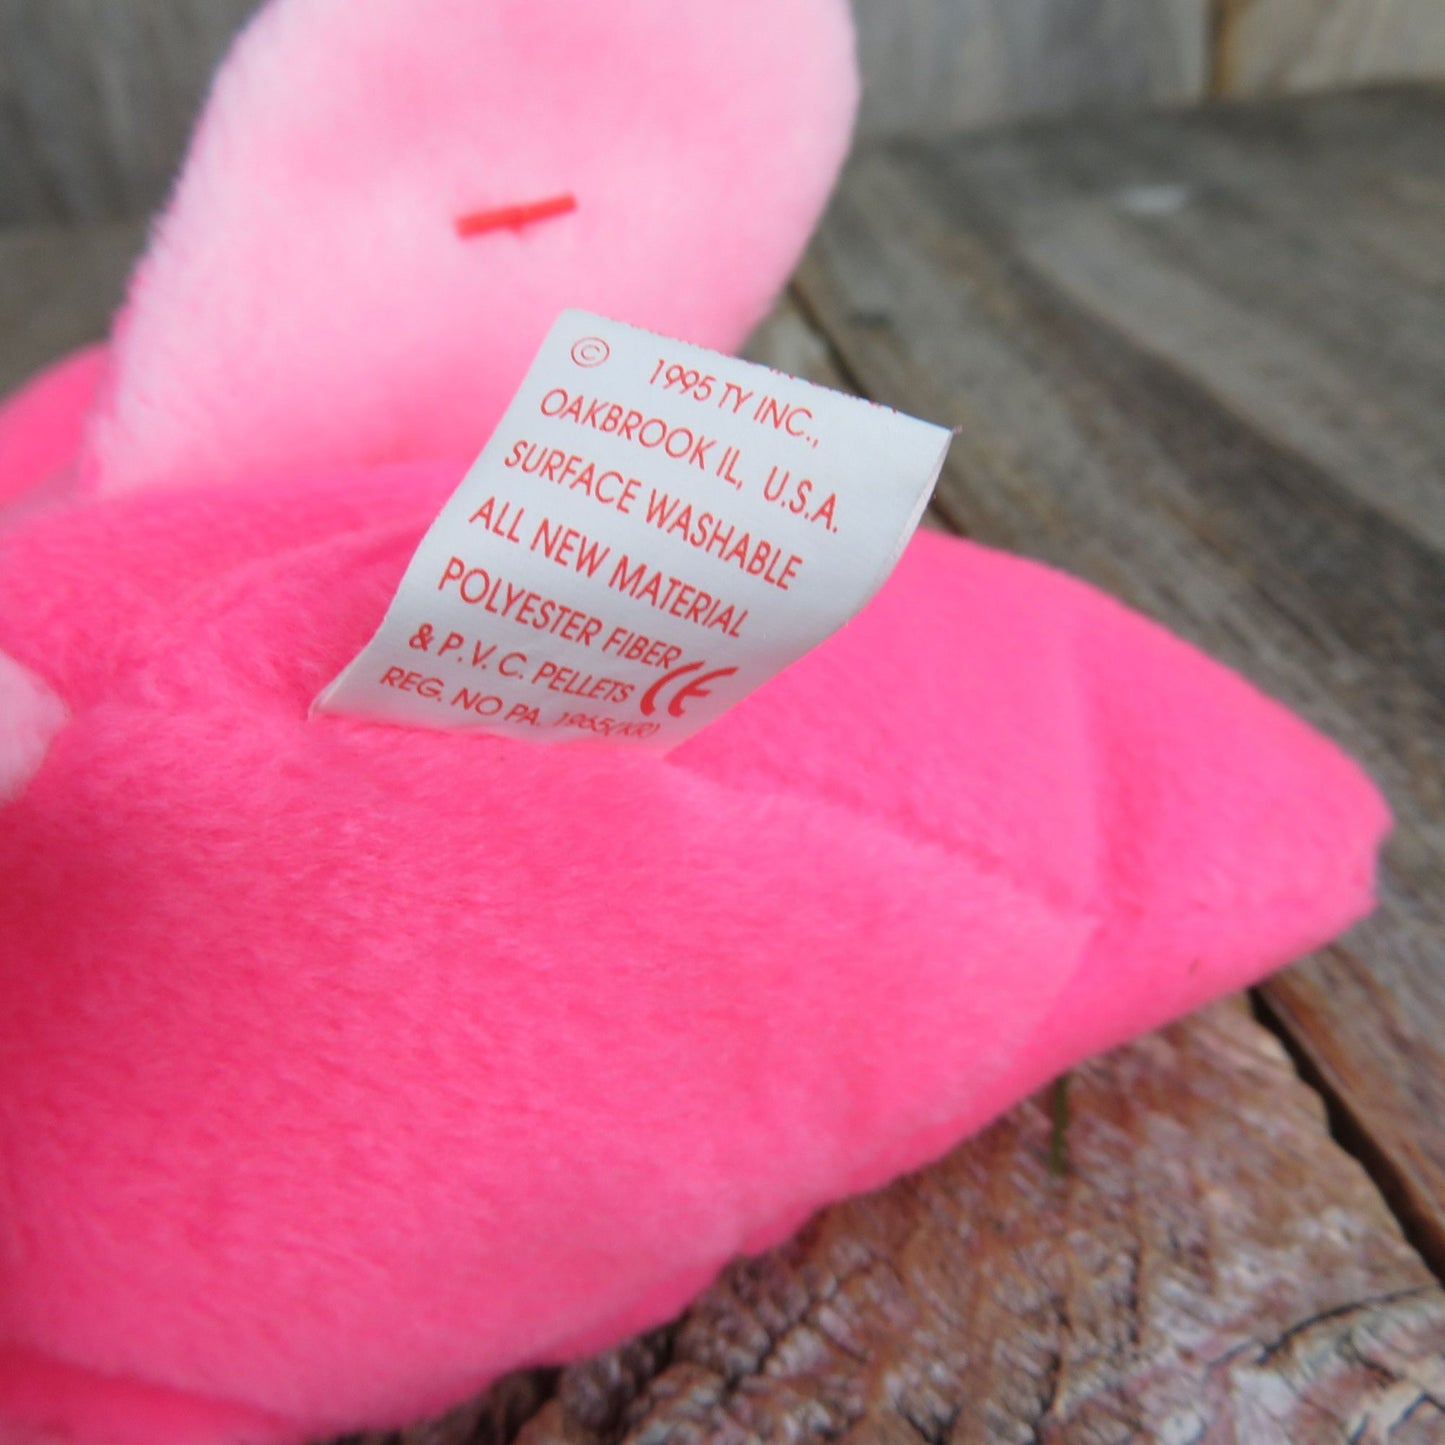 Flamingo Plush Pinky Bird Beanie Baby Bean Bag Pink Stuffed Animal 1995